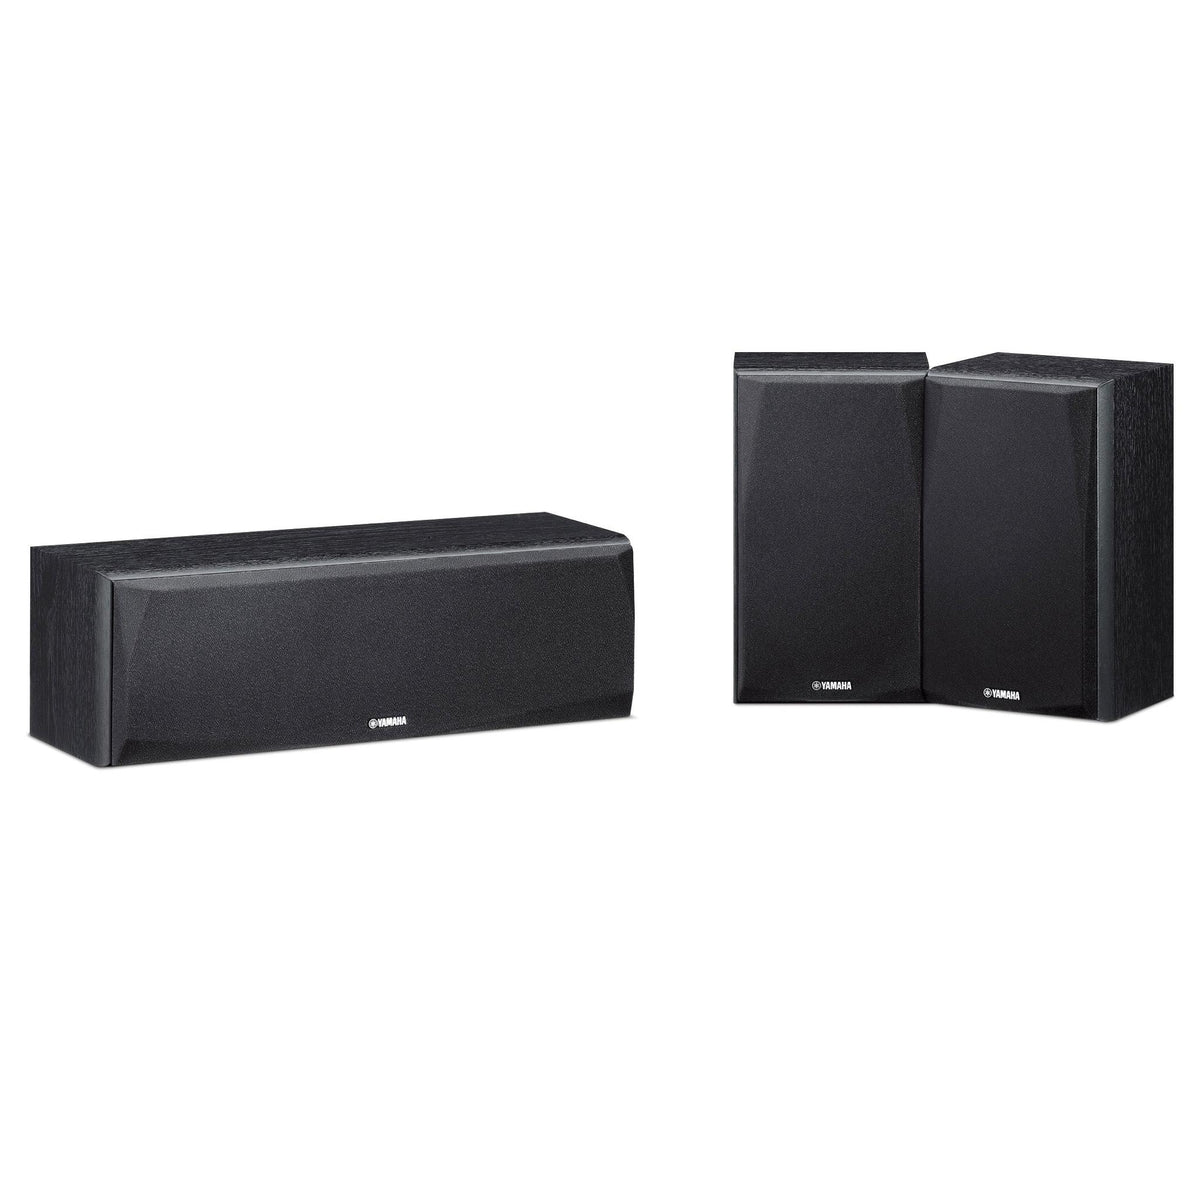 Yamaha NS-P51 - Centre and Surround Speaker Package - AVStore